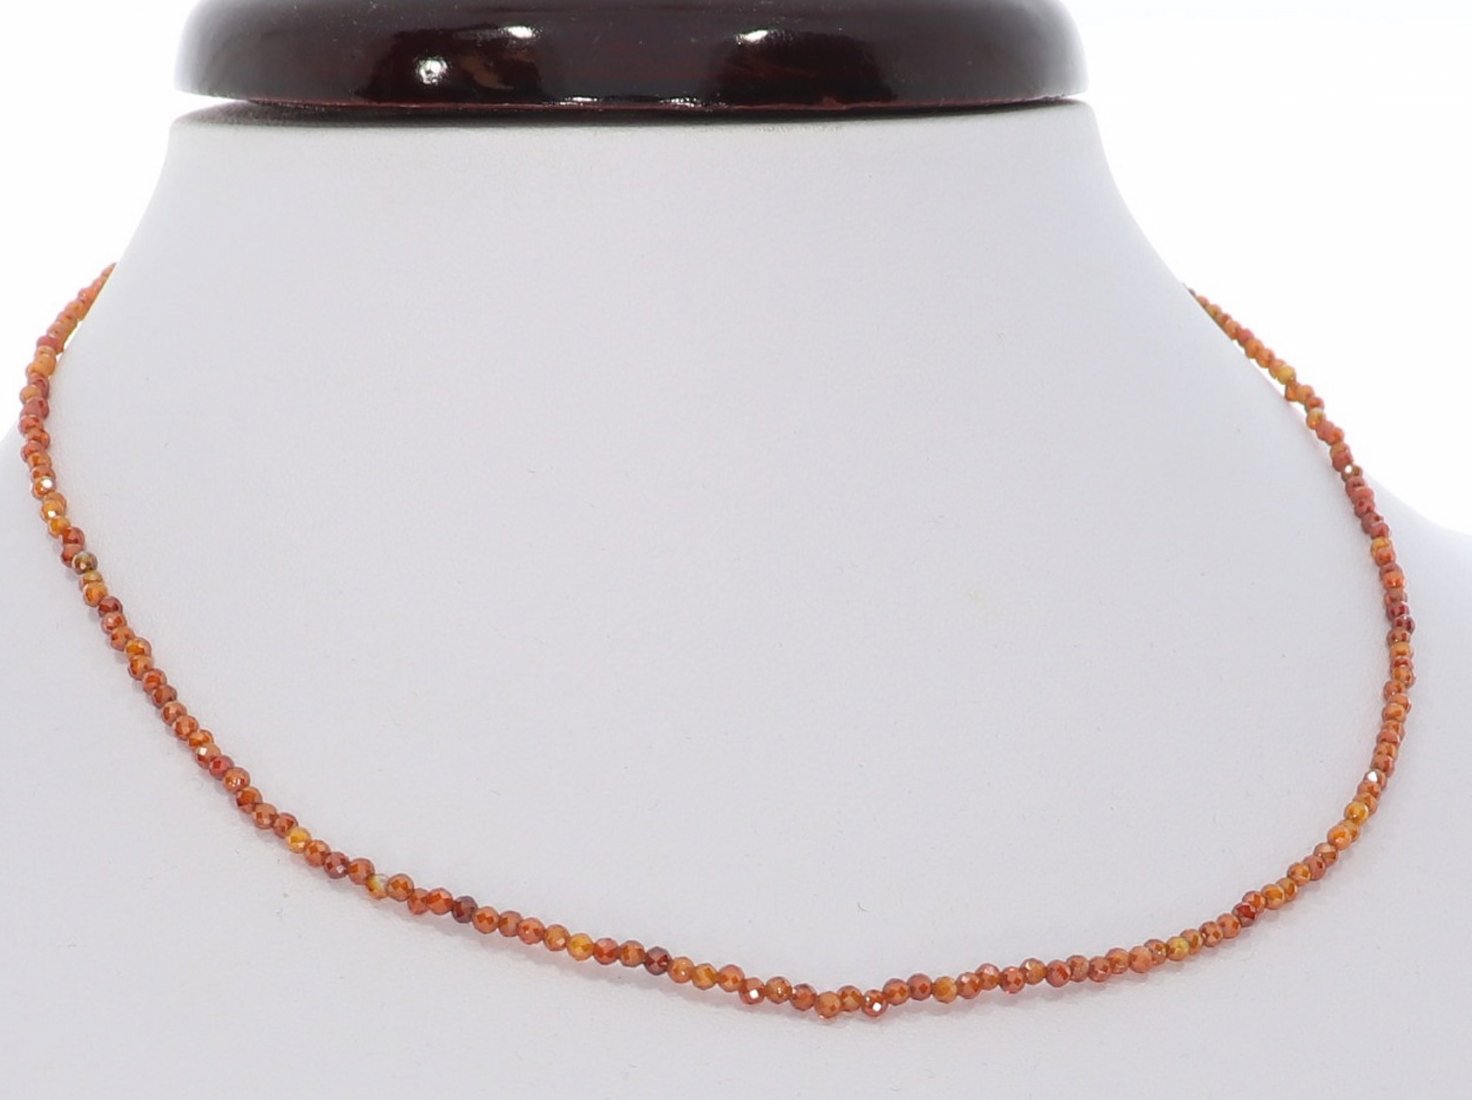 Zirkonia orange Kugel Halskette facettiert Silber farben 2mm - 40-45cm Kettenverlängerer KK351